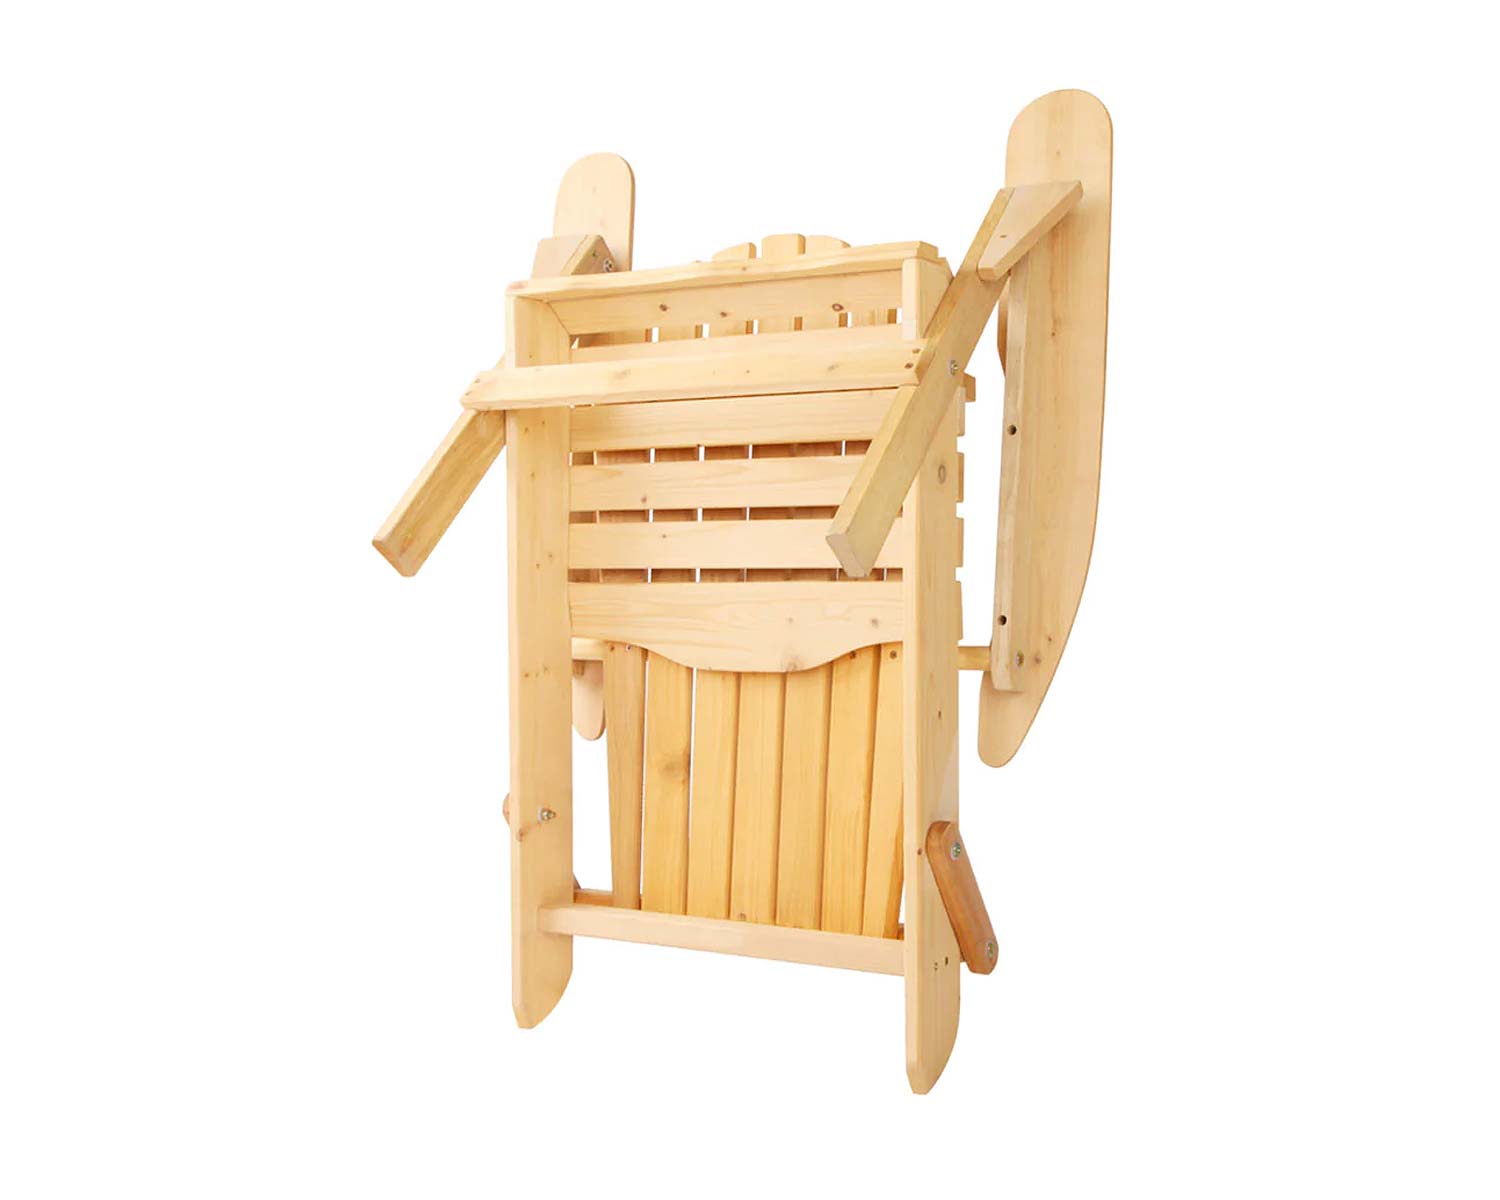 Adirondack Patio Chair - Natural Finish